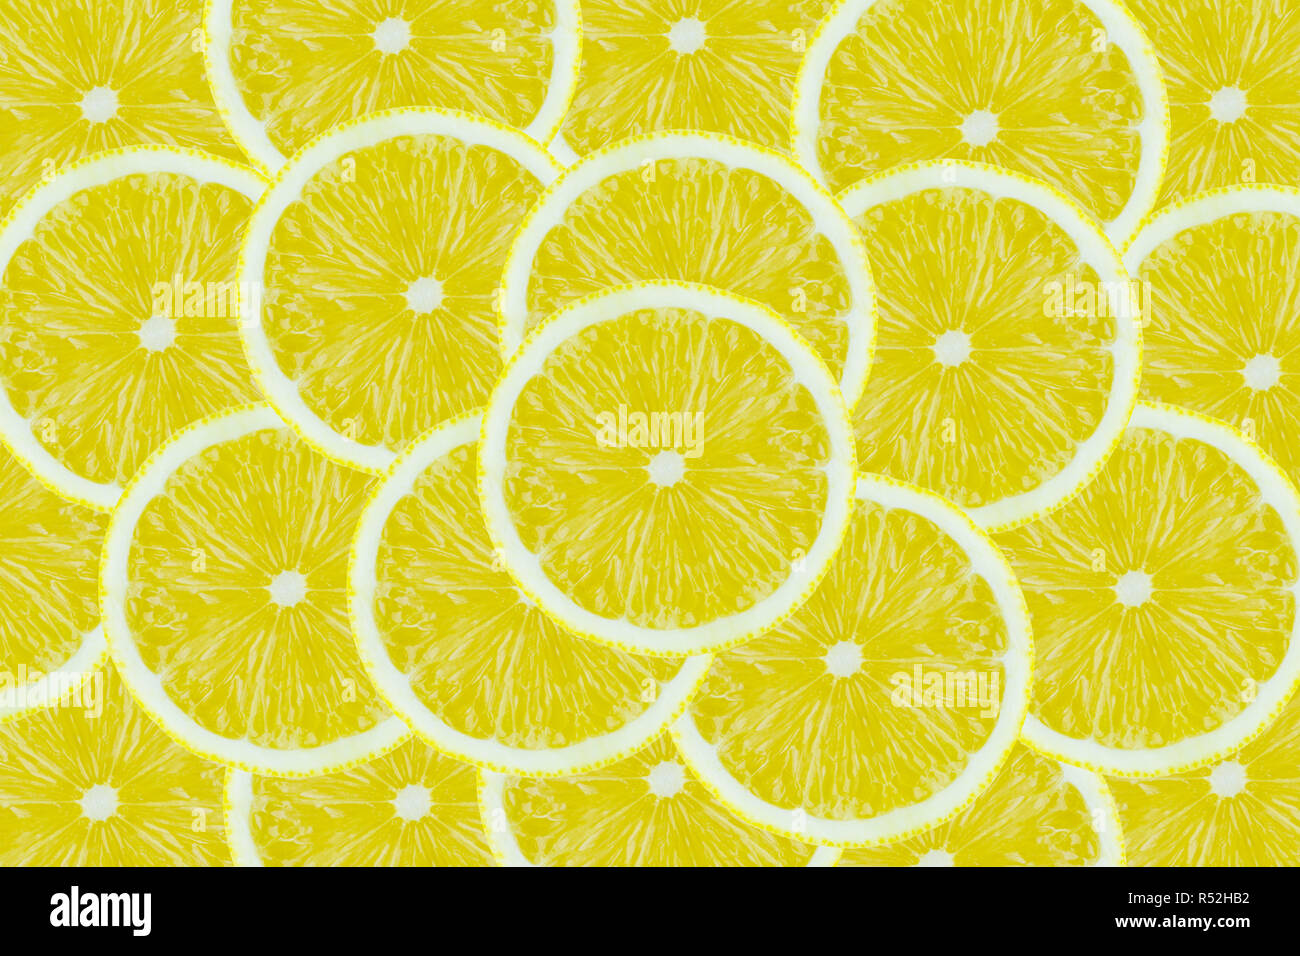 Close-up of stacked sliced Lemons. Stock Photo